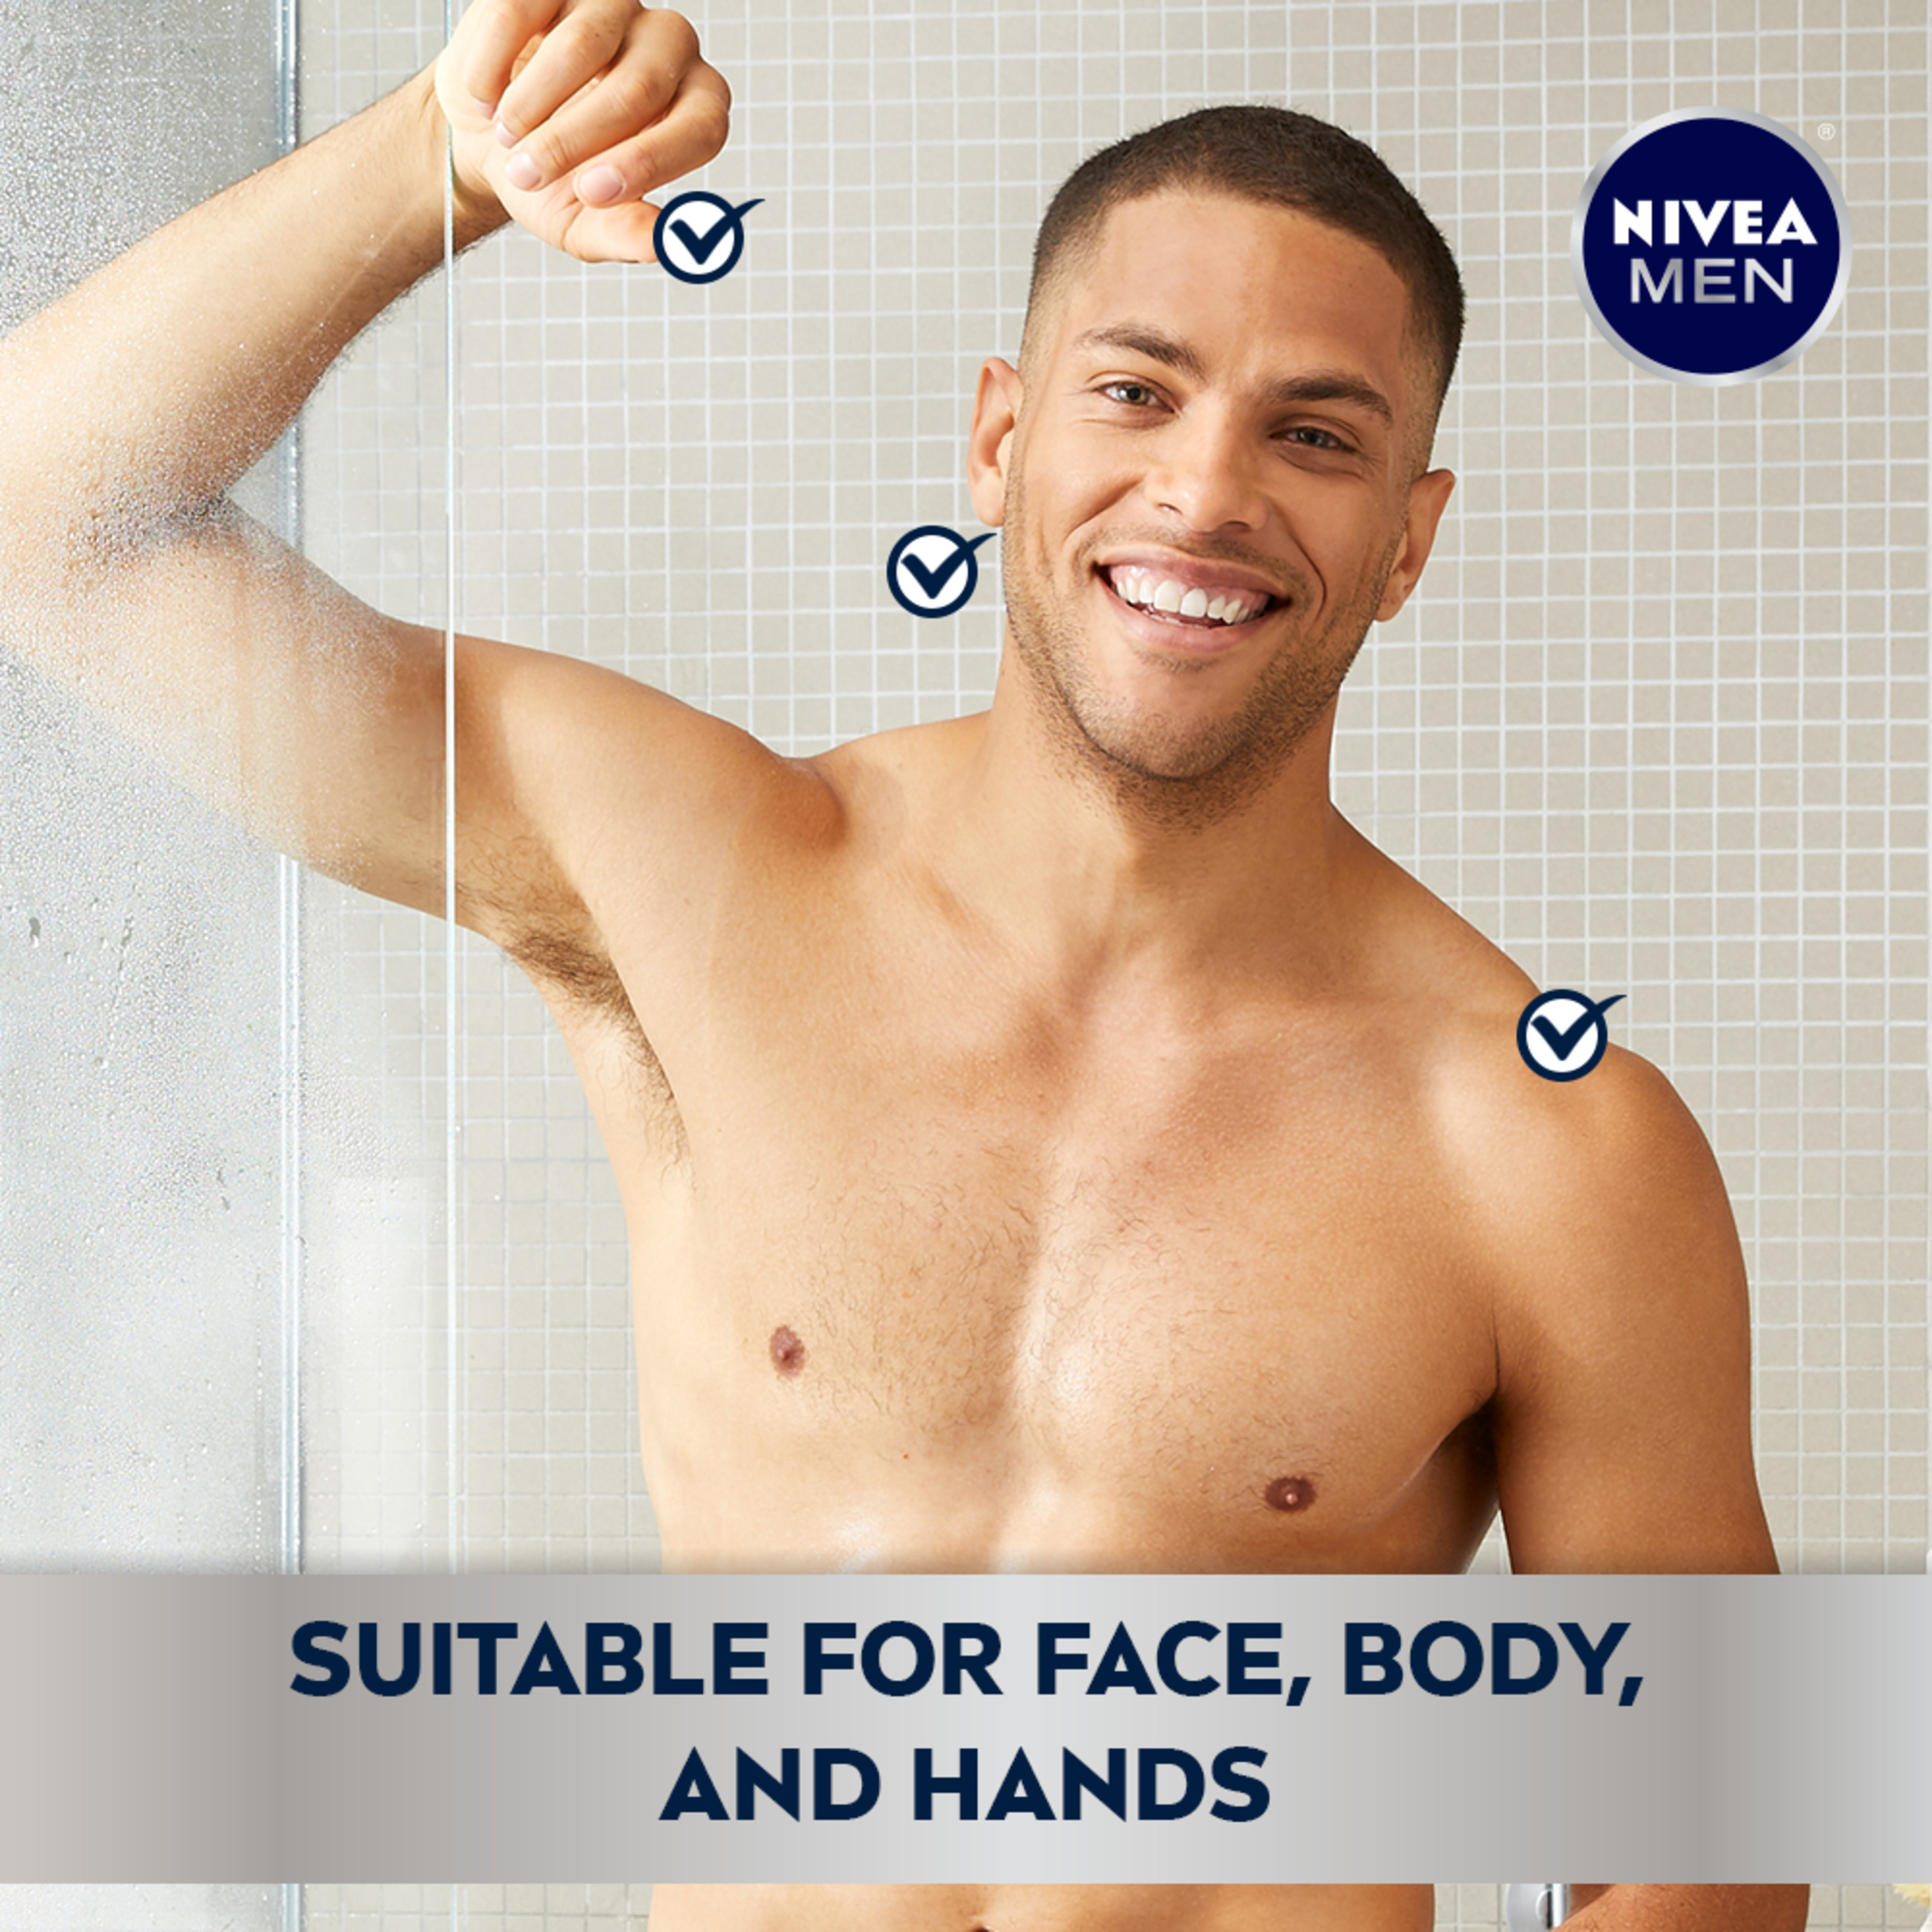 NIVEA MEN Creme, Face Hand and Body Cream, 5.3 oz. - image 4 of 6